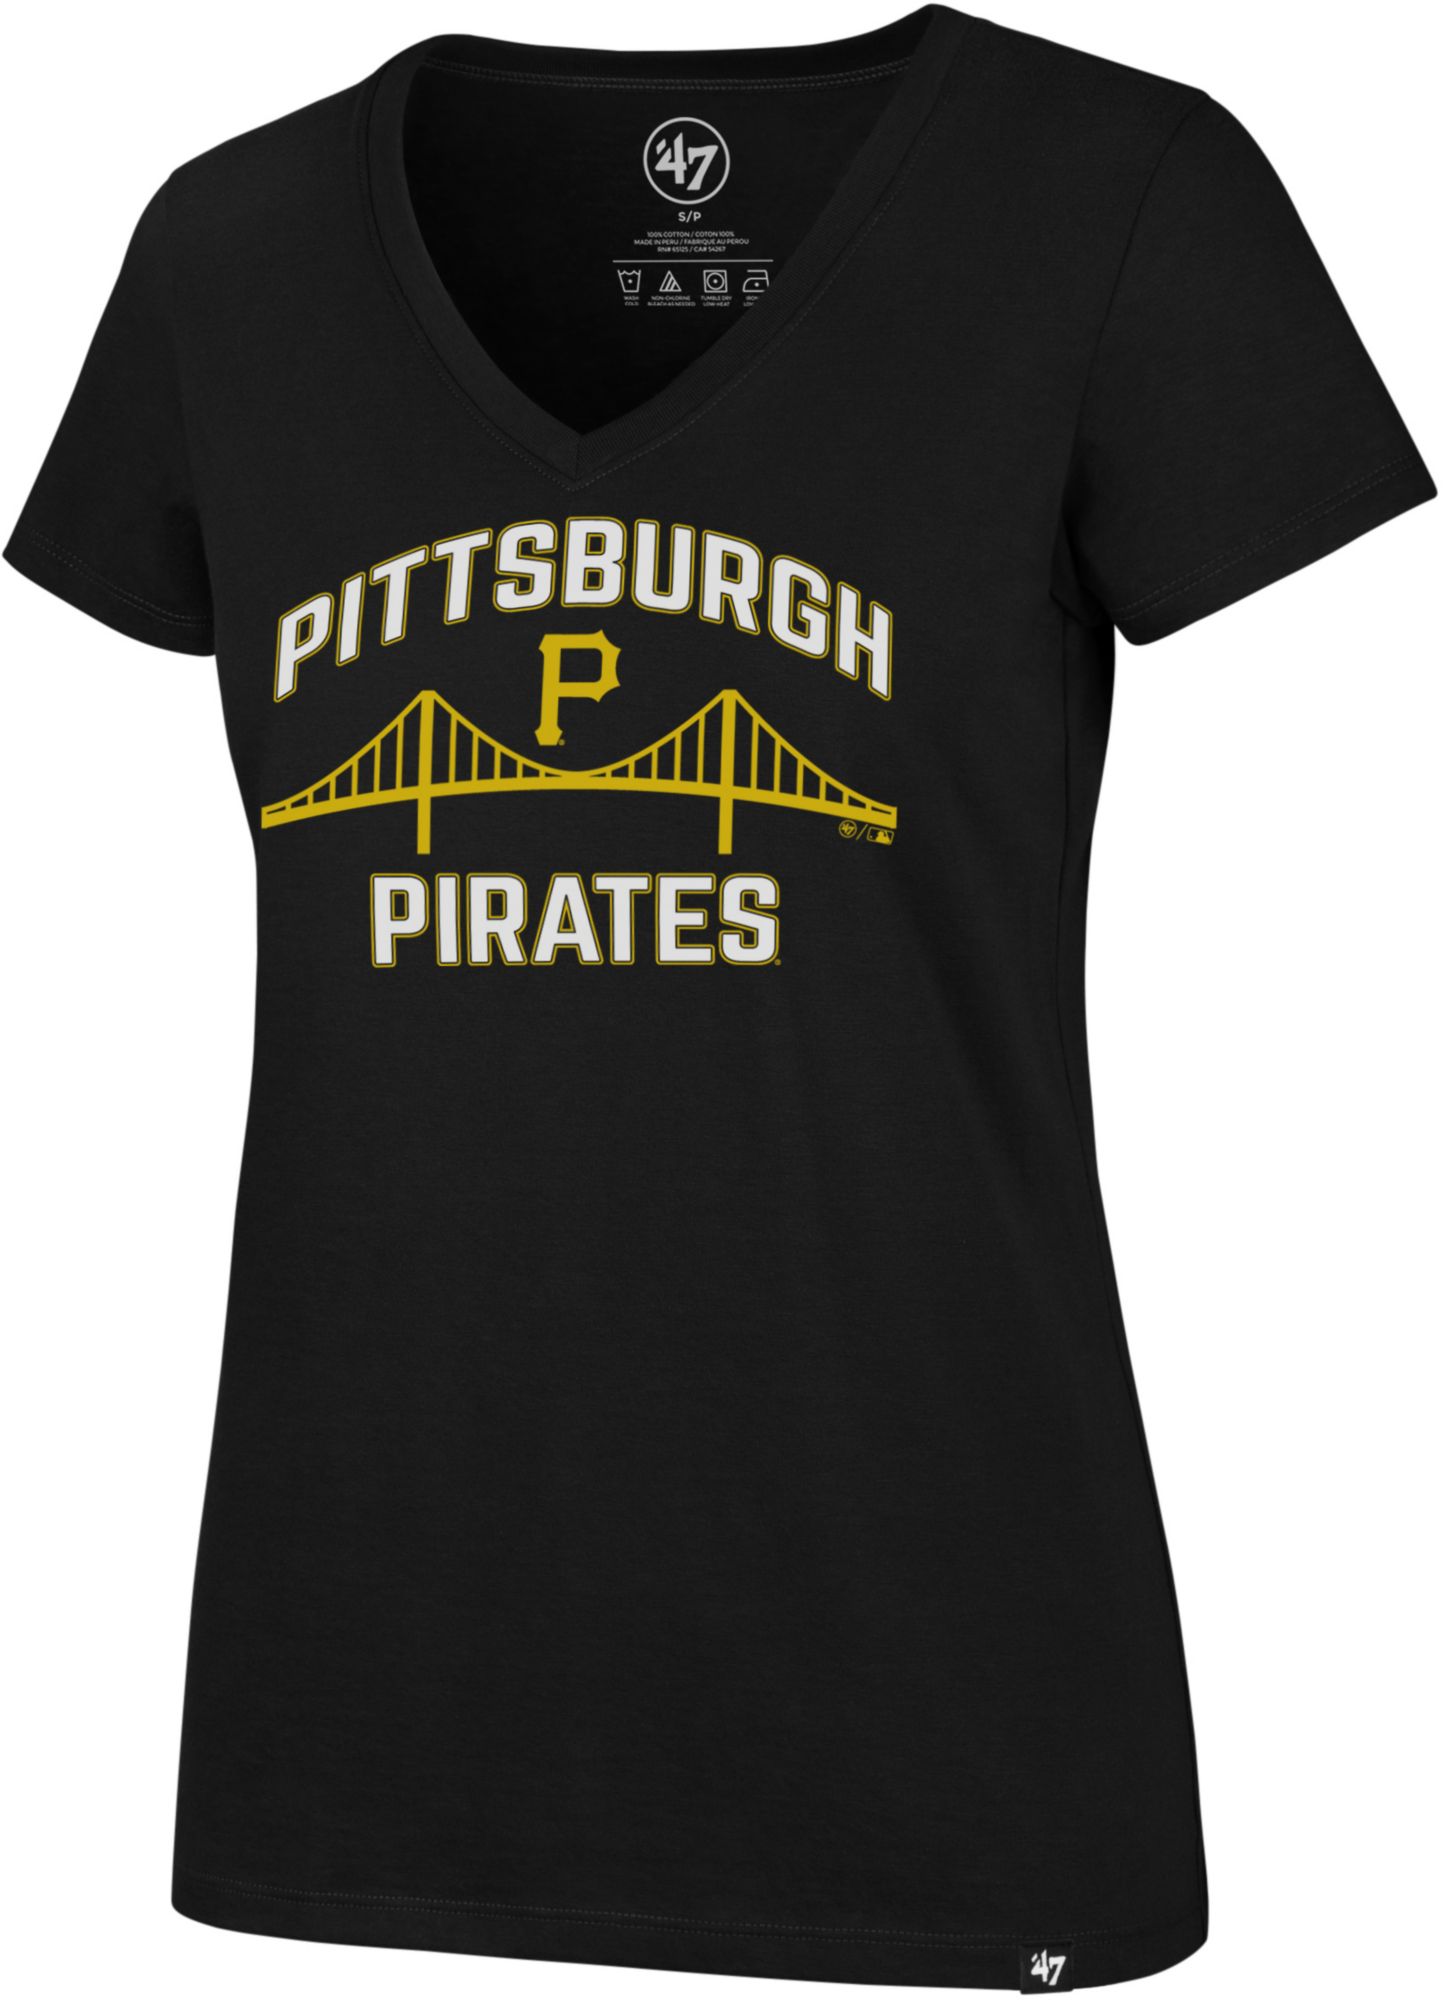 pittsburgh pirates womens t shirt